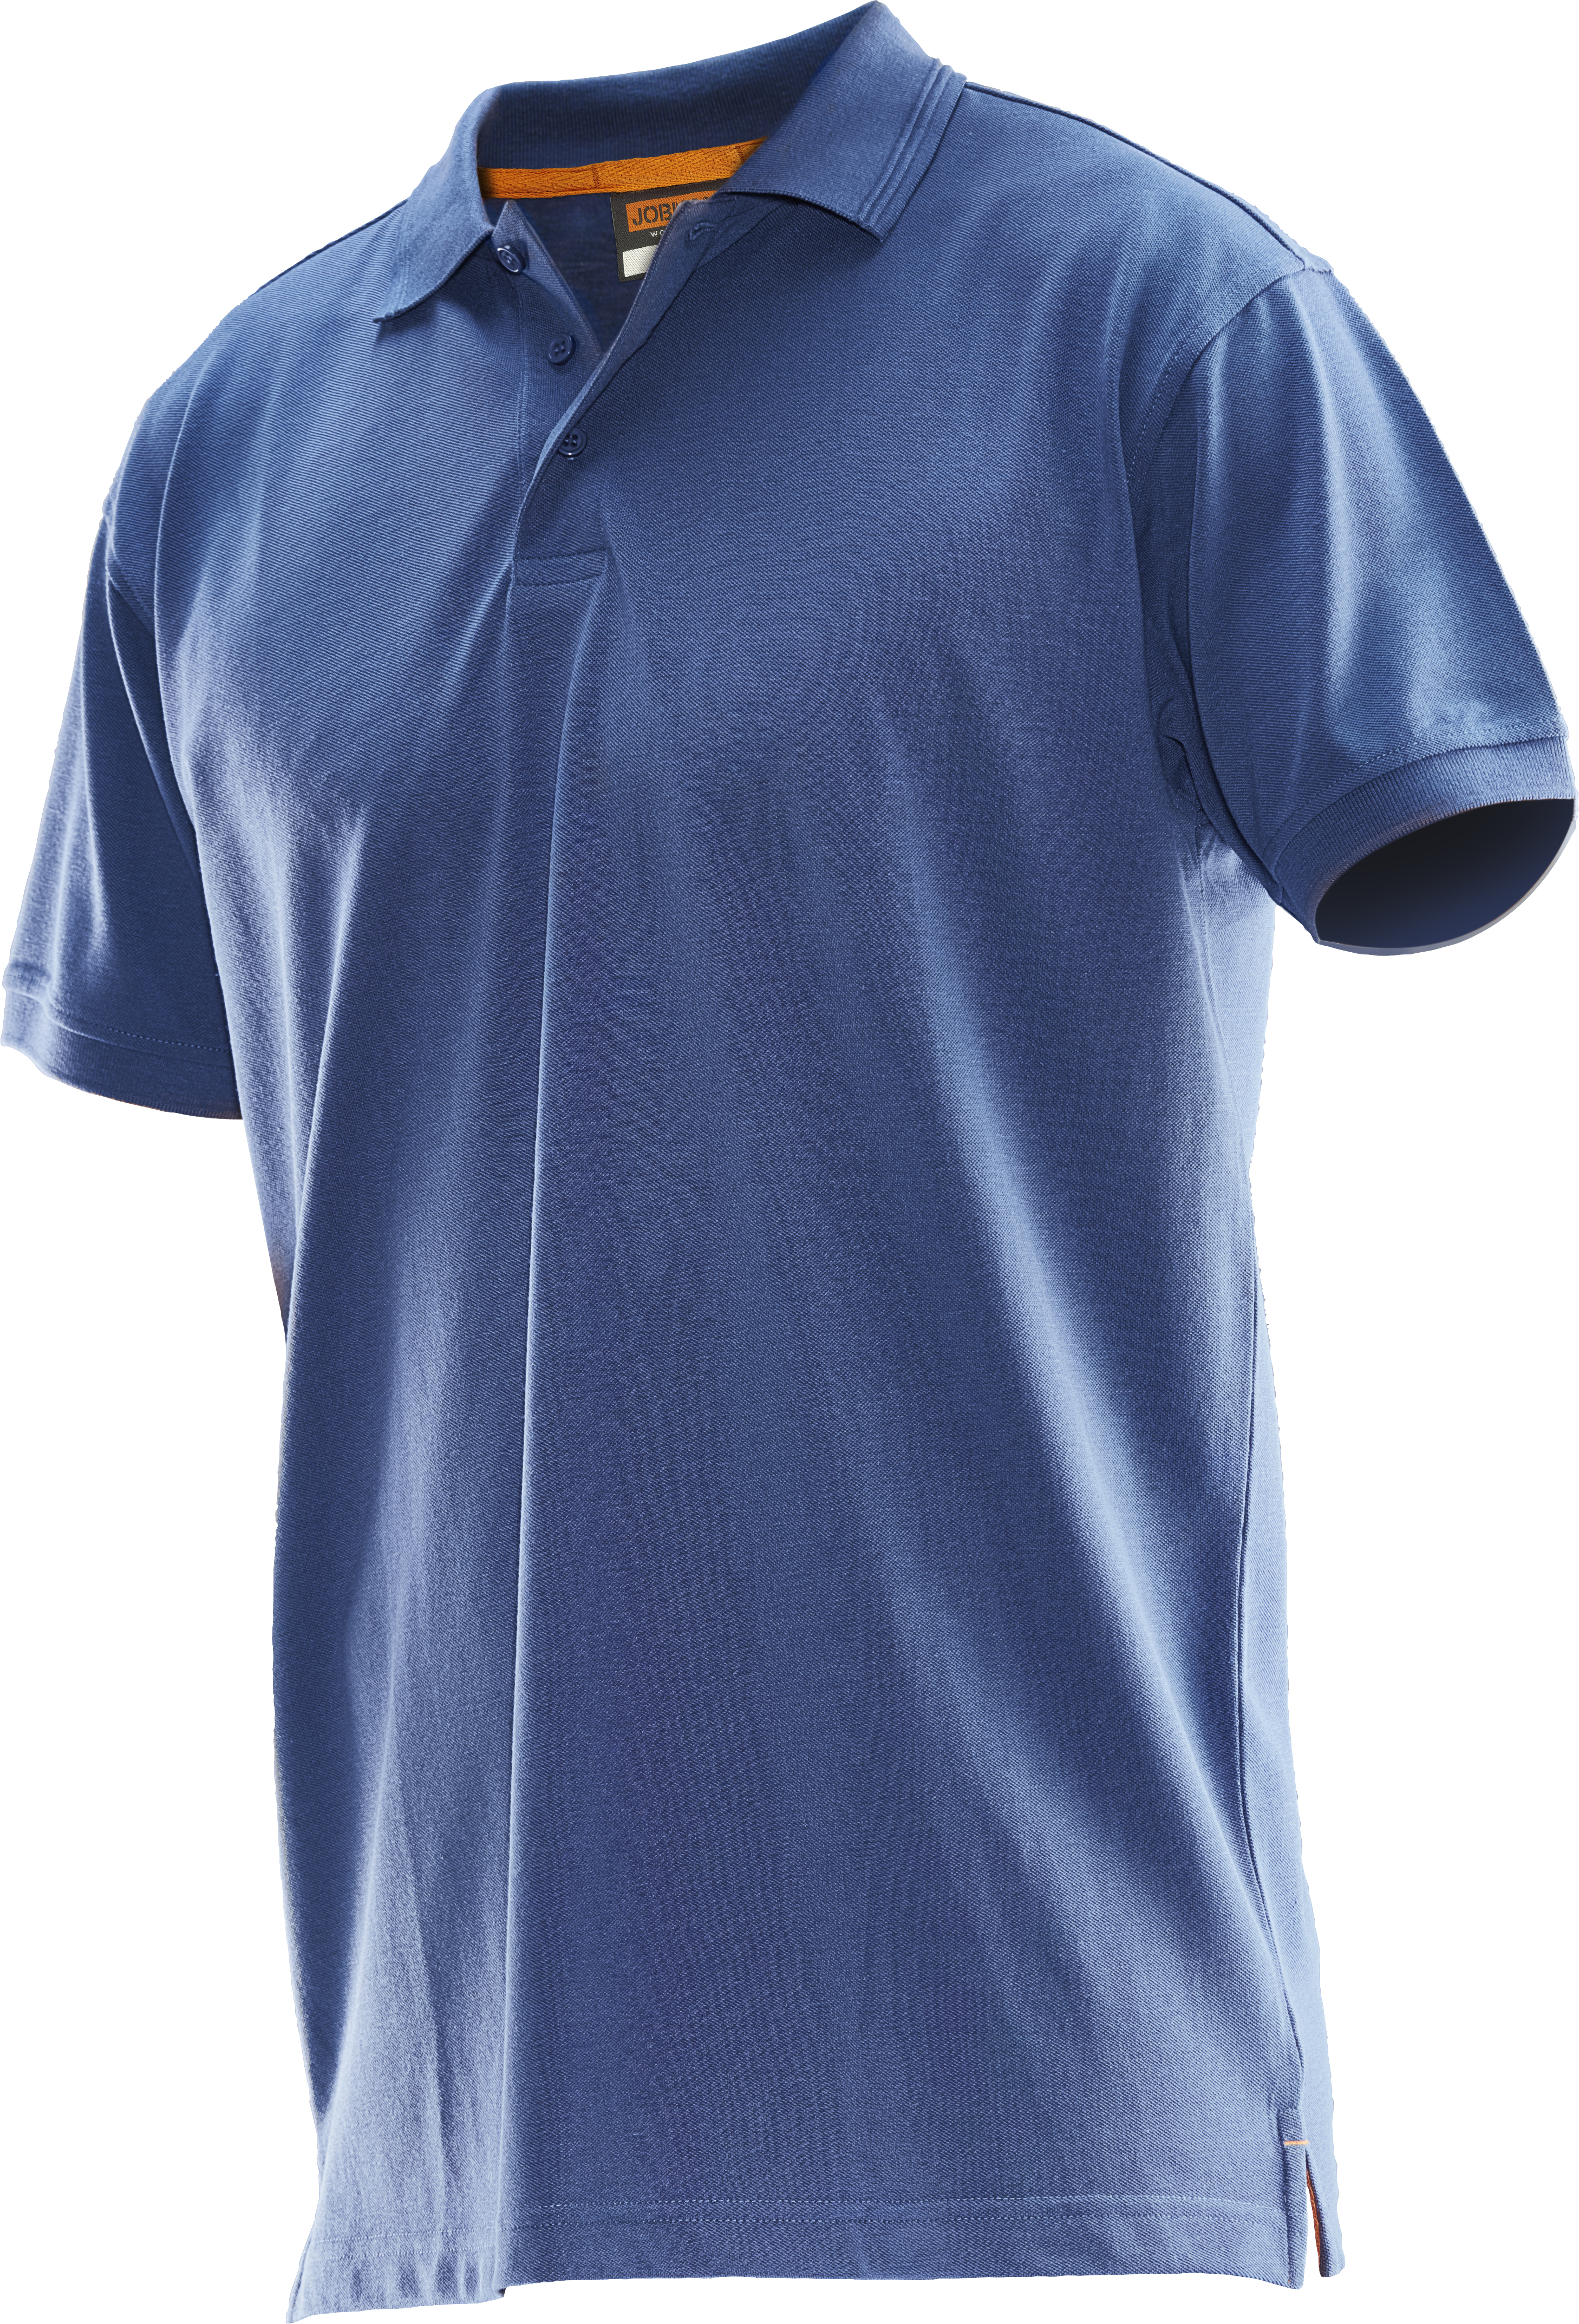 5564 T-shirt polo XXL bleu ciel